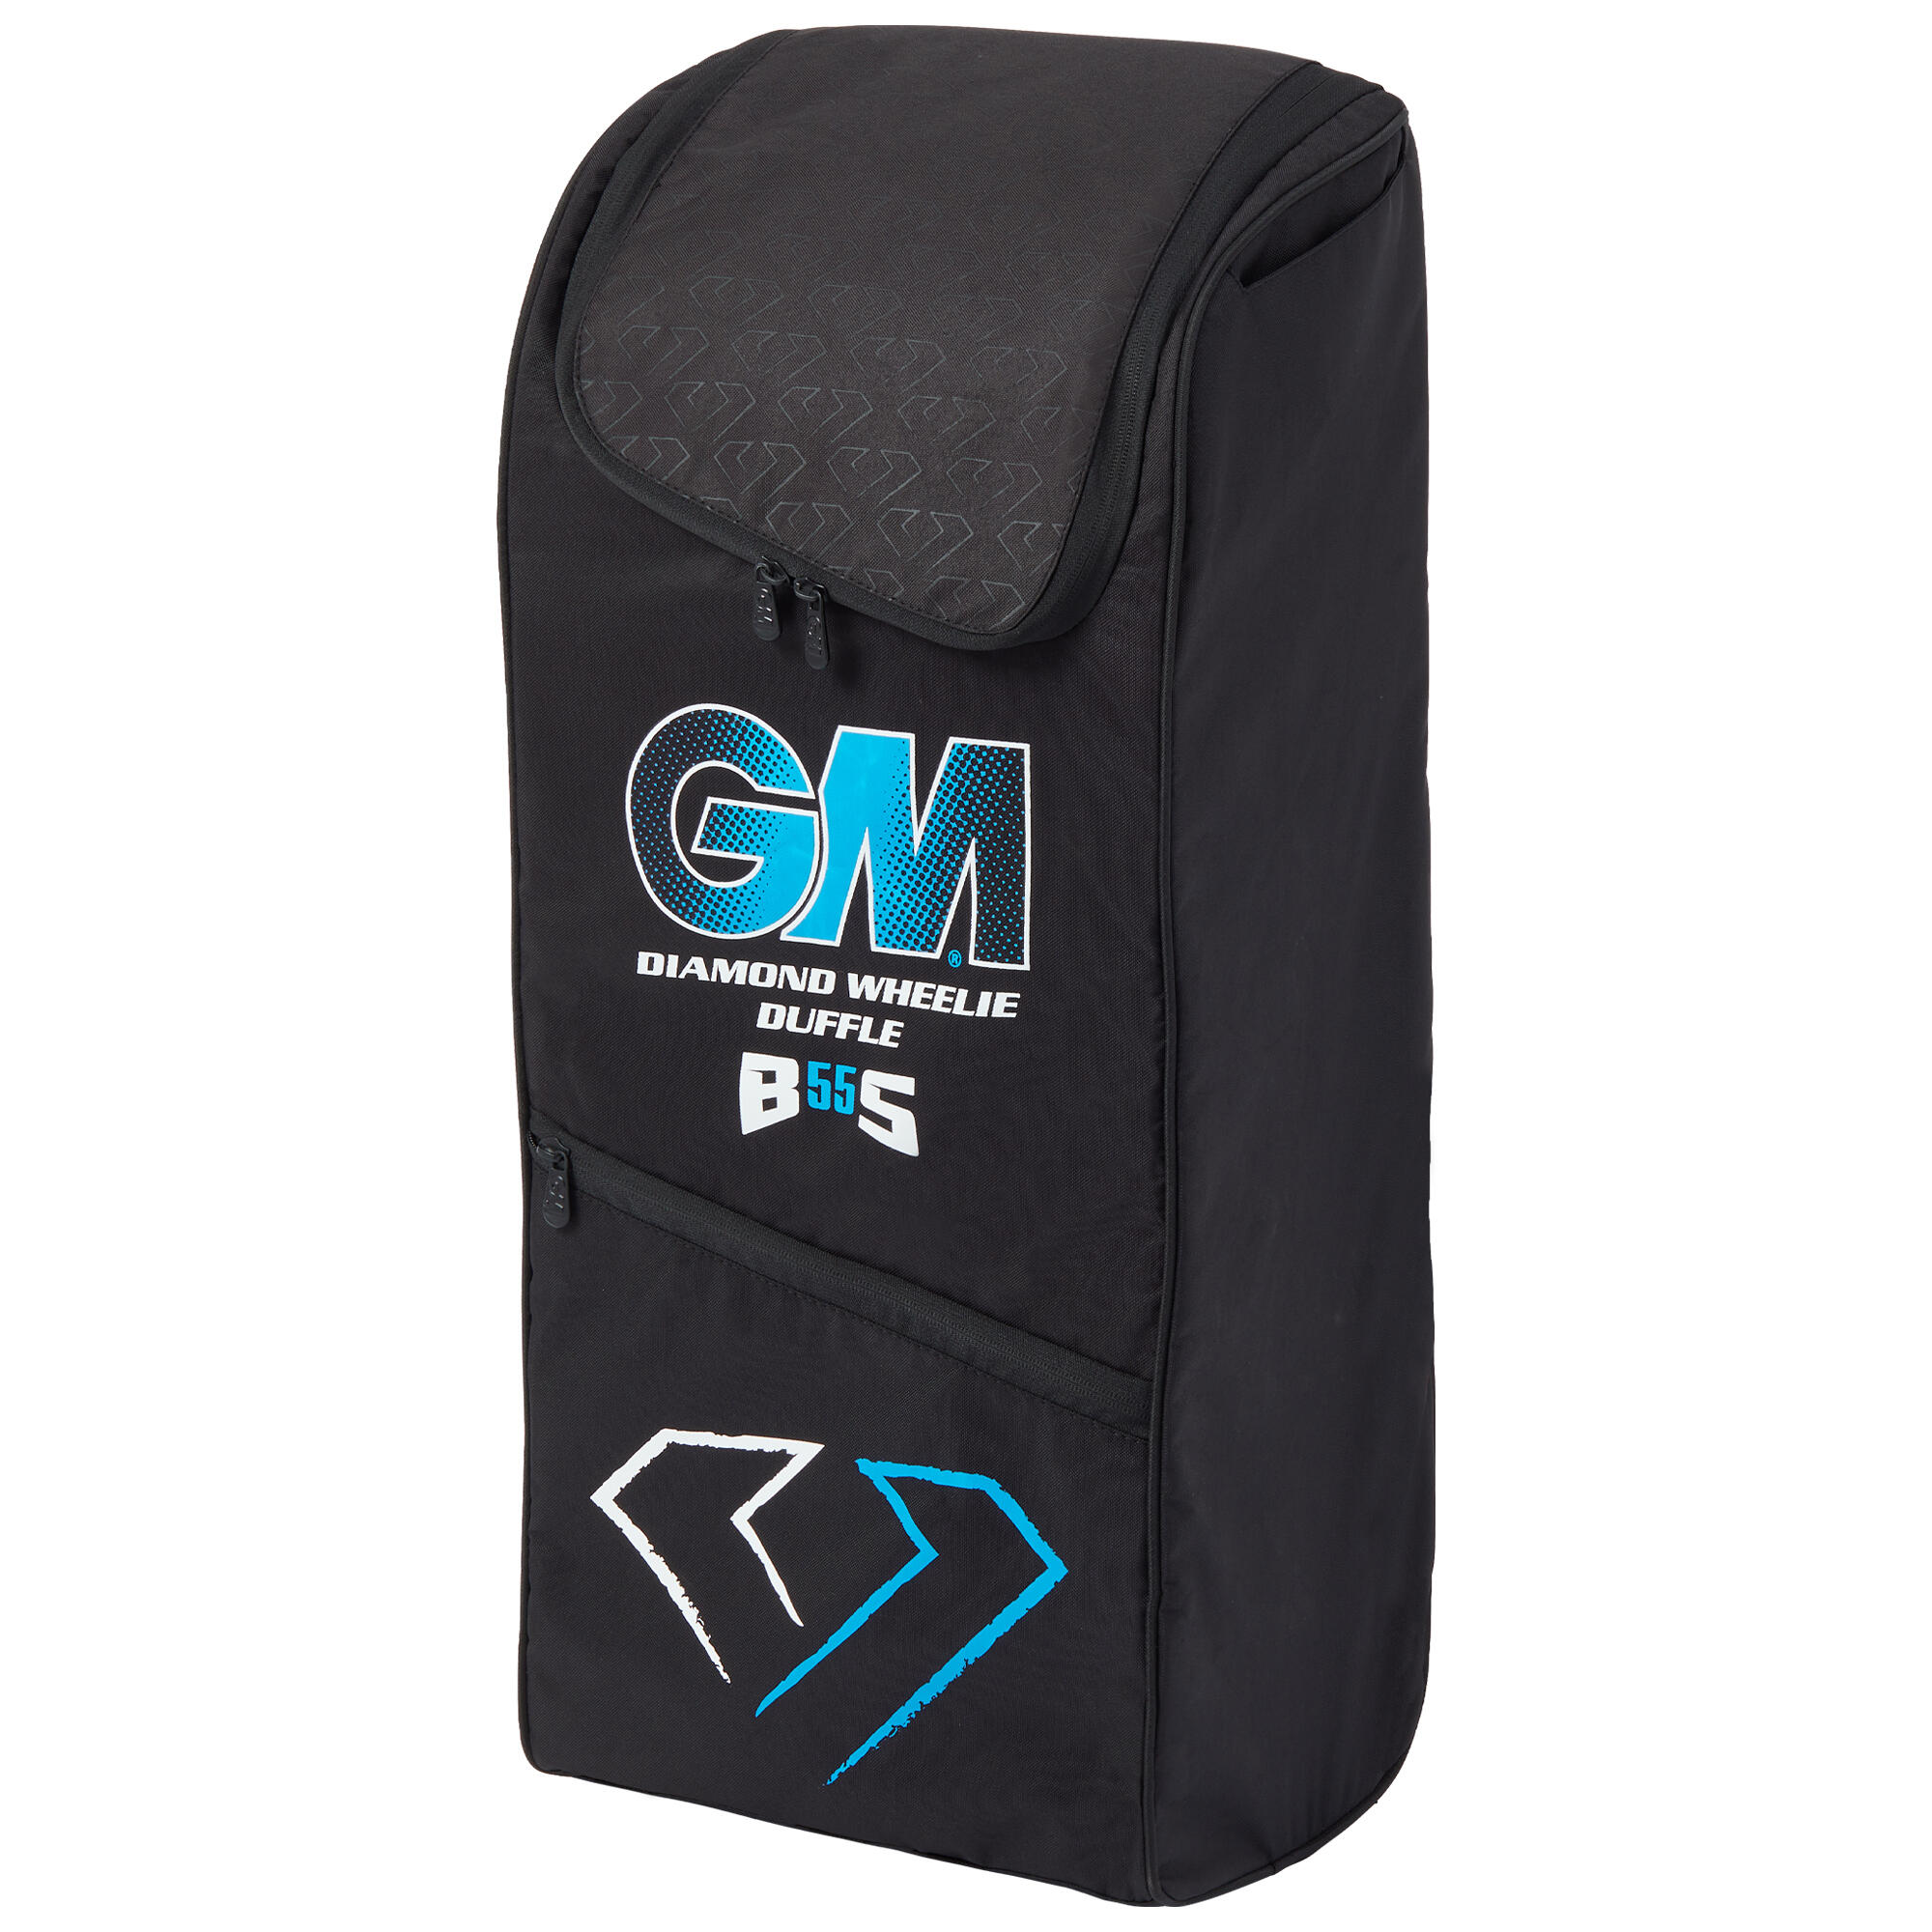 GM Diamond 606 Wheelie Duffle Cricket bag 3/3